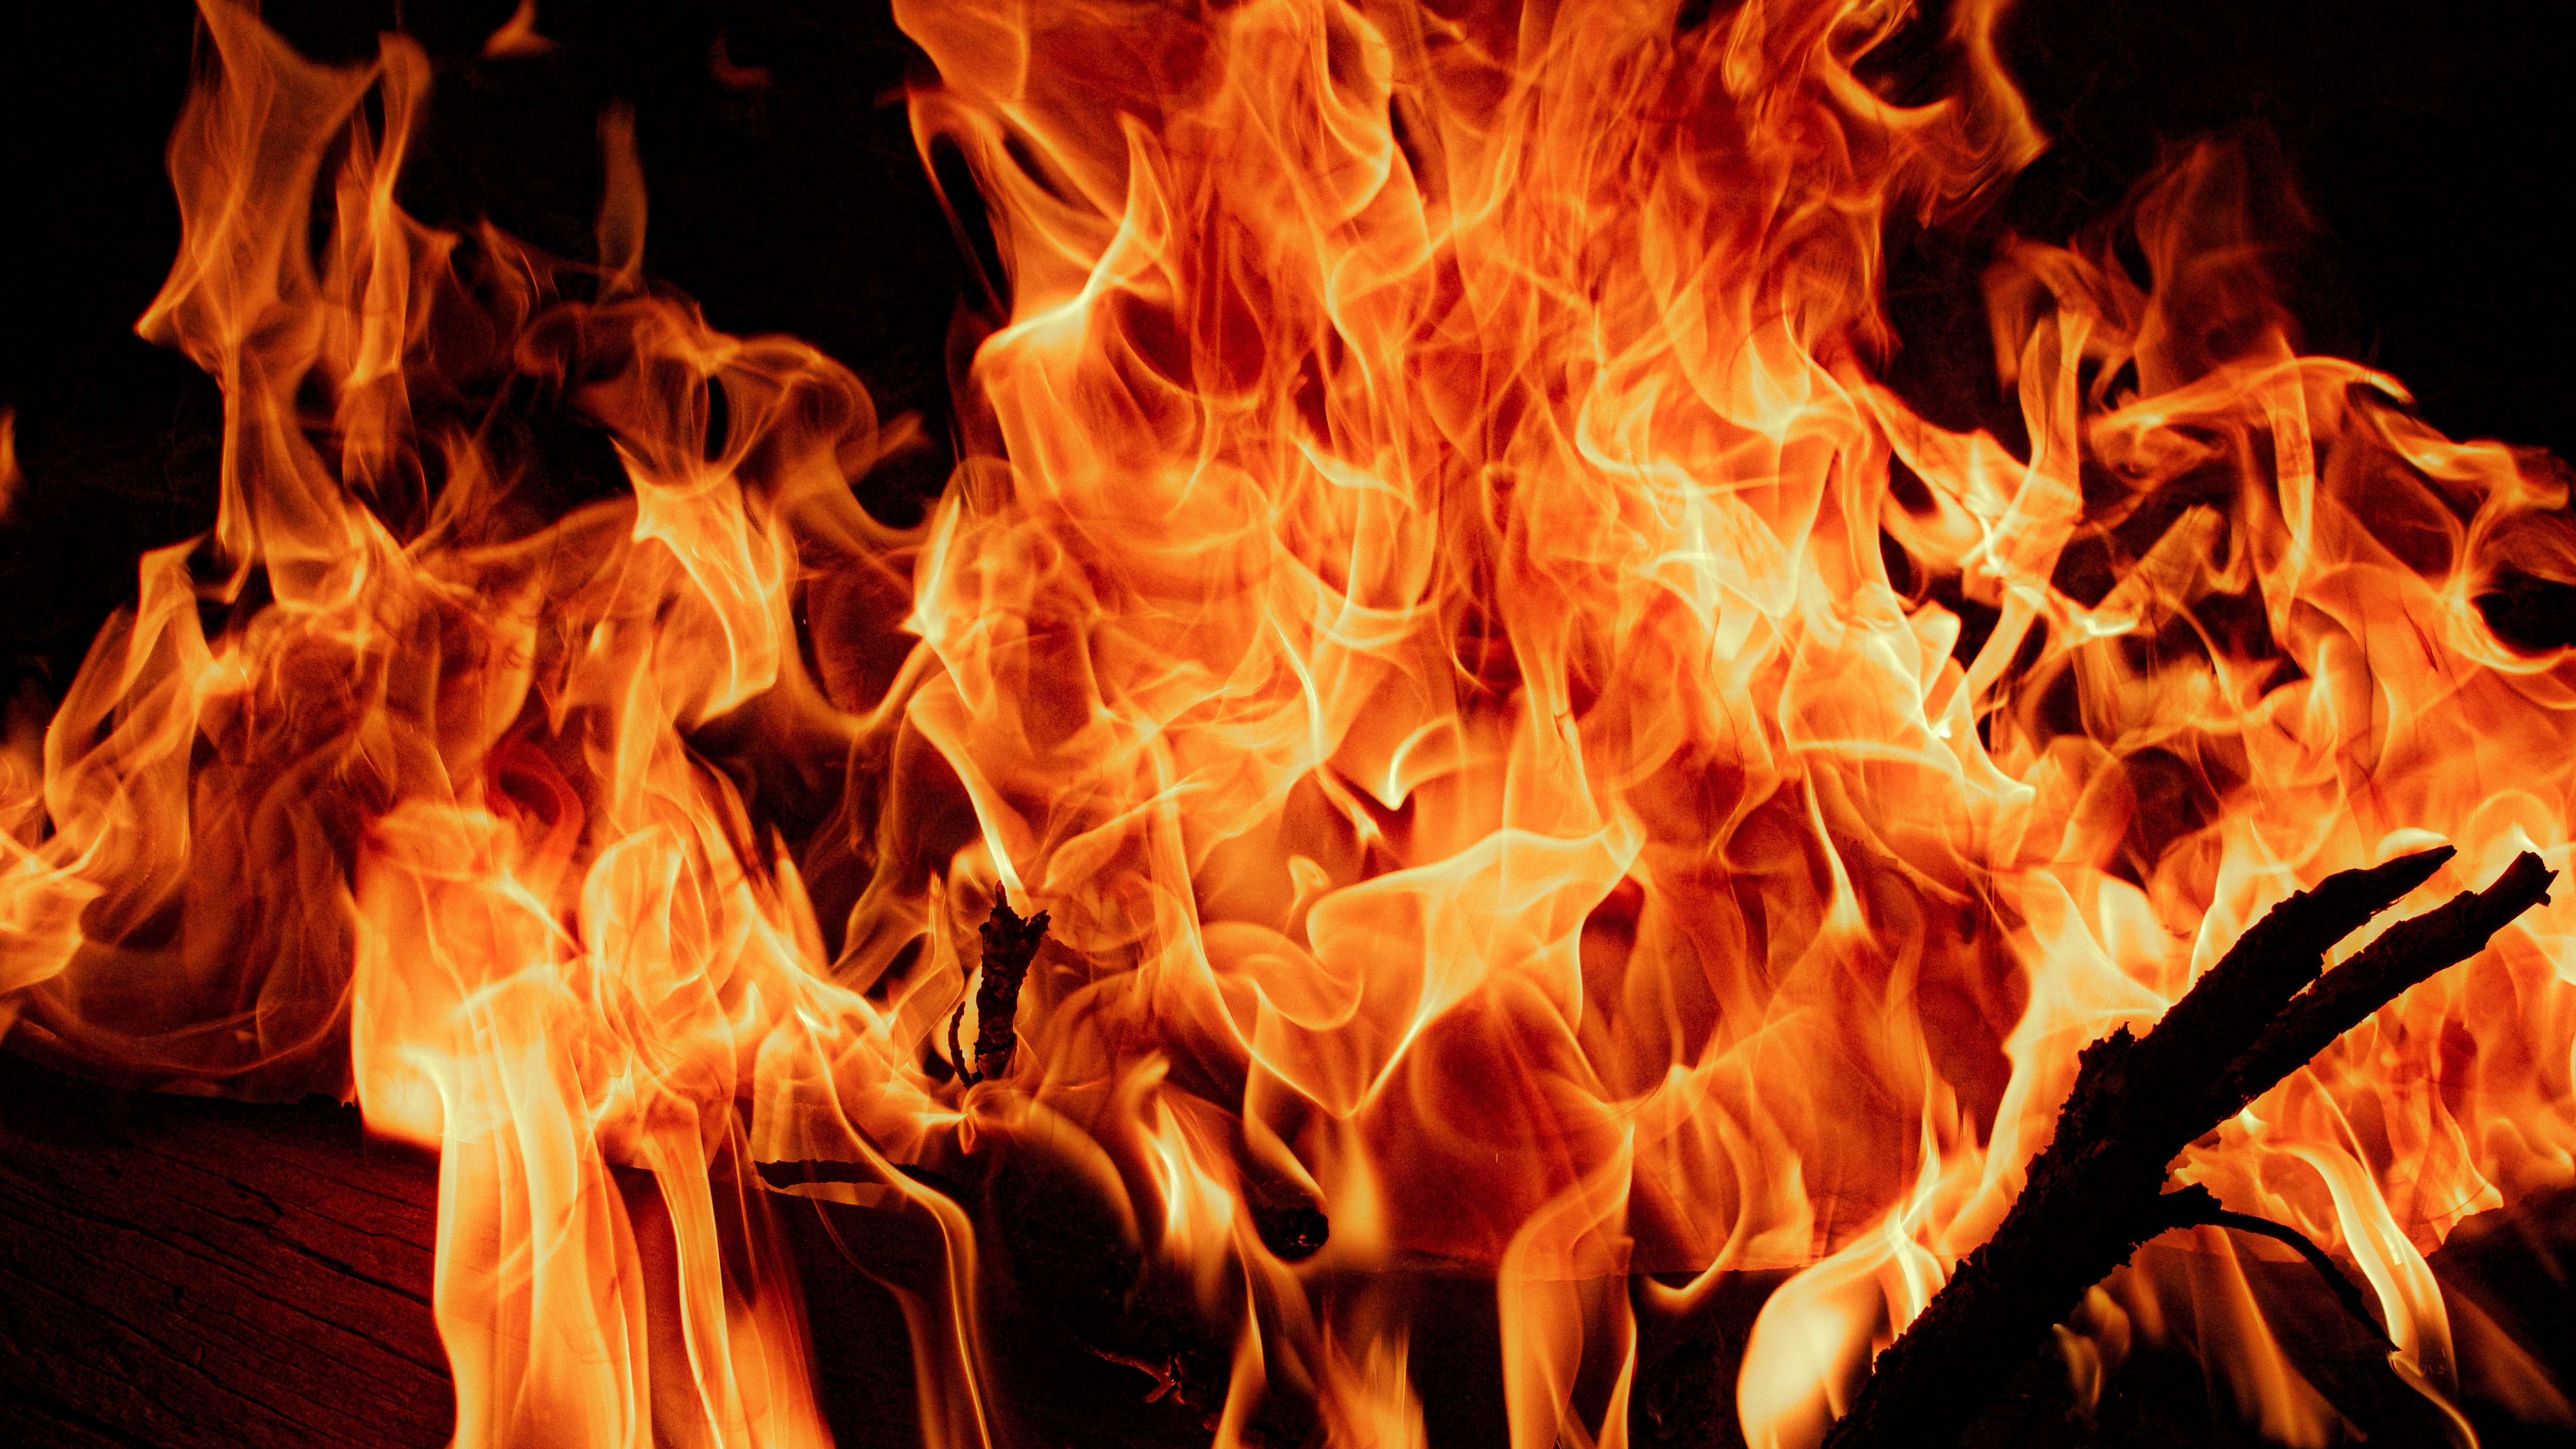 flame, fire, bonfire, dark High Definition image